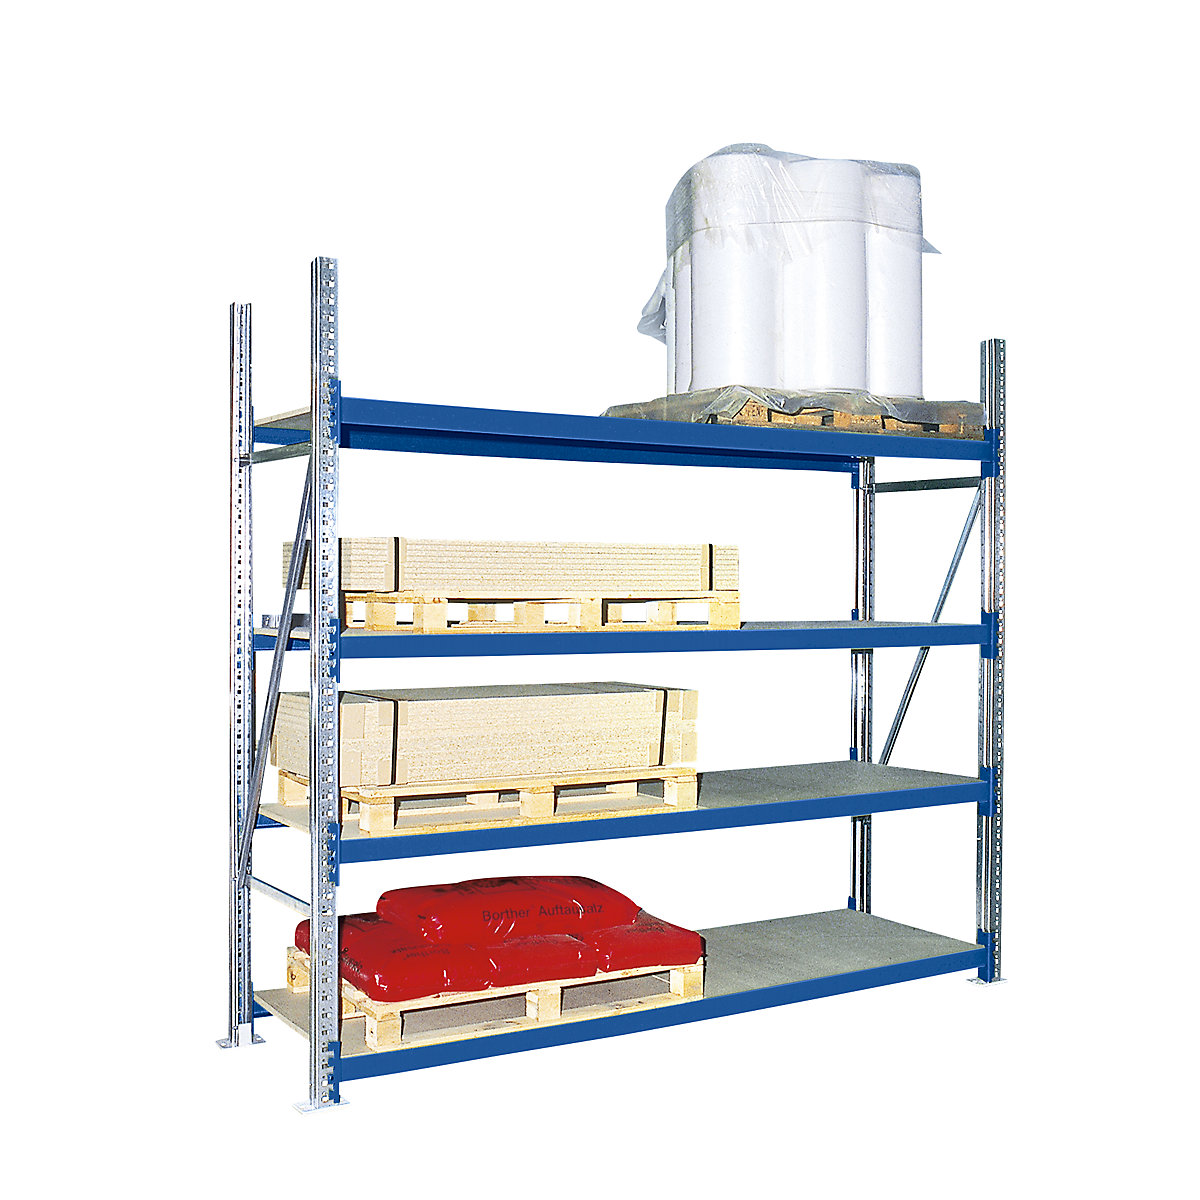 Wide span shelving unit with moulded chipboard shelves – eurokraft pro, depth 800 mm, cross beam length 1350 mm, height 2500 mm, standard shelf unit, blue RAL 5010